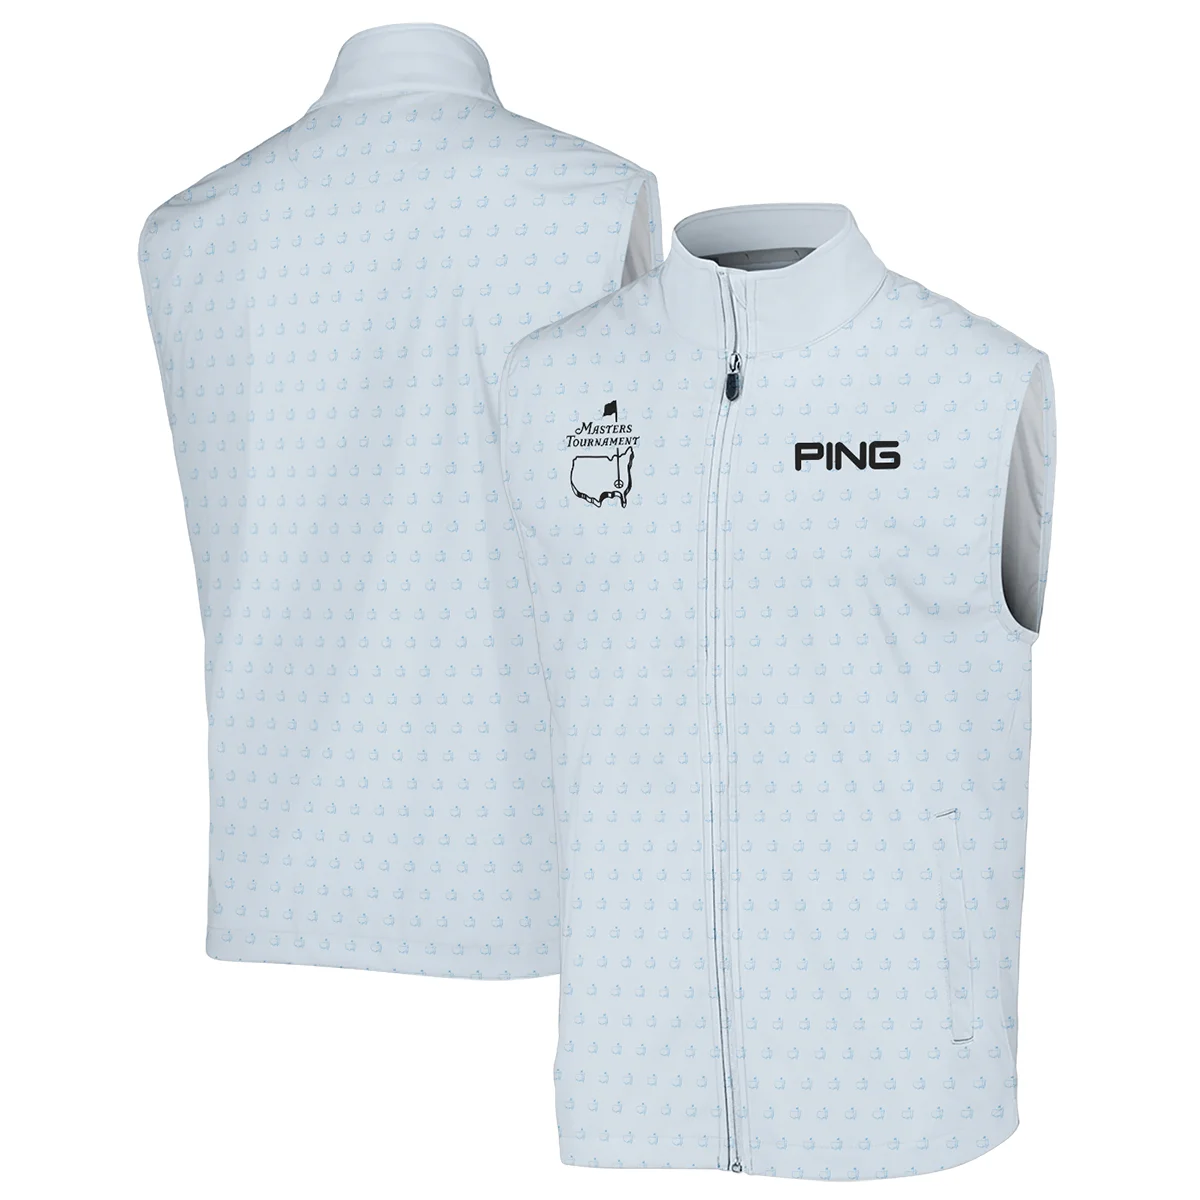 Pattern Masters Tournament Ping Sleeveless Jacket White Light Blue Color Pattern Logo  Sleeveless Jacket